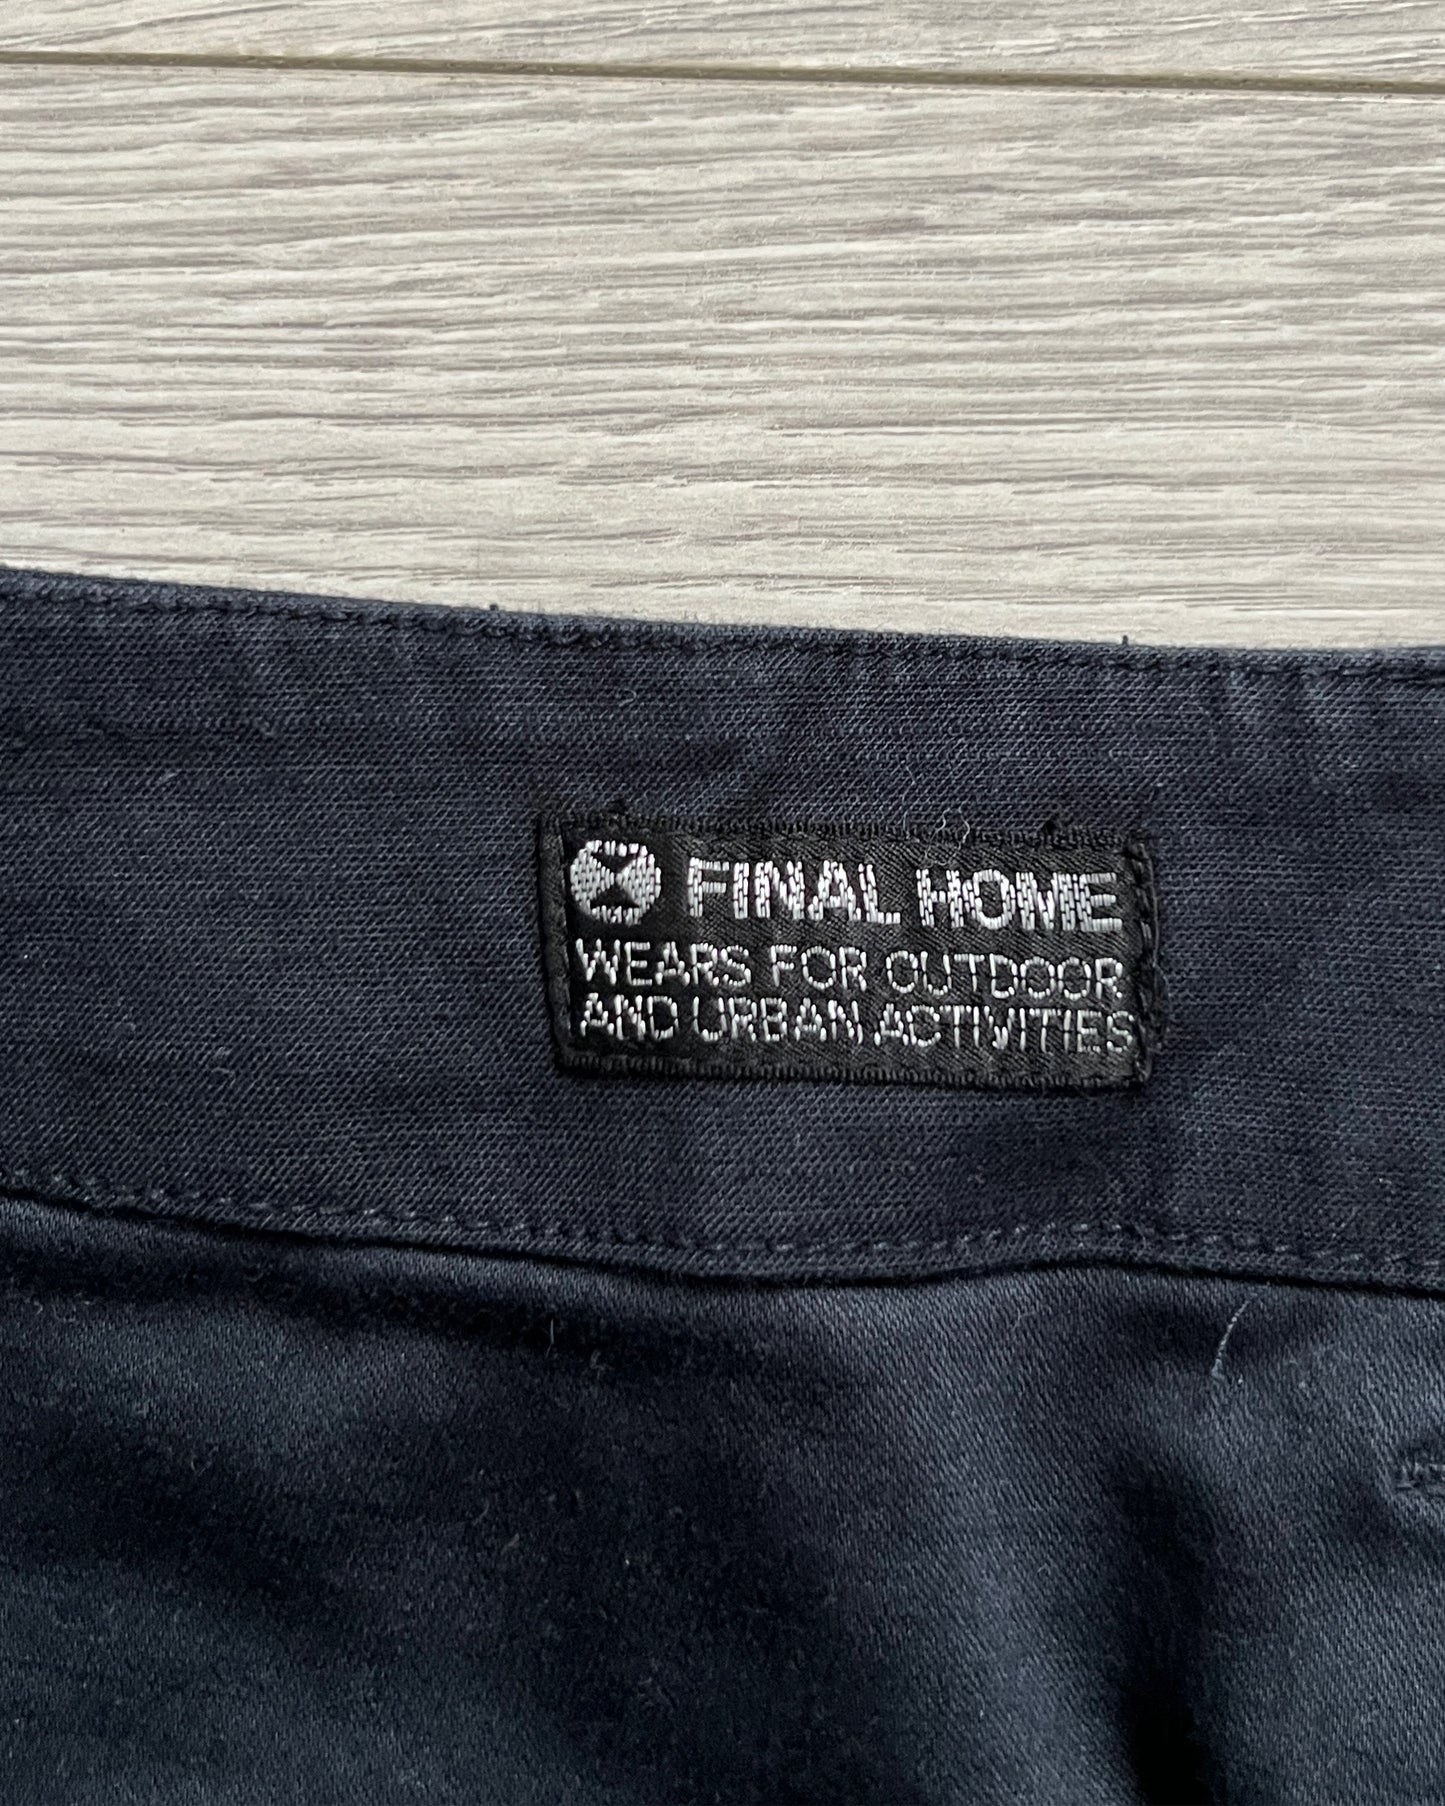 Final Home by Kosuke Tsumura Bondage Cargo Pants - Size 32